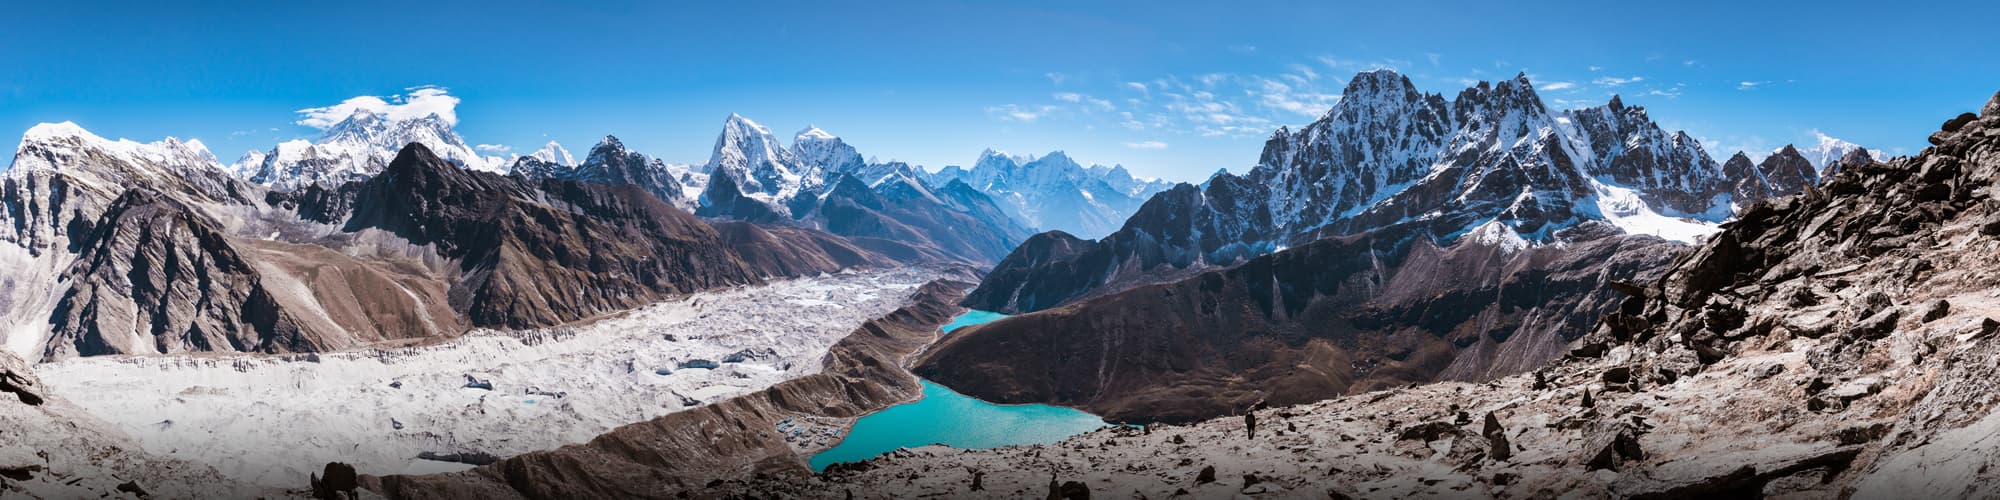 Découverte Népal © Thrithot / Adobe Stock